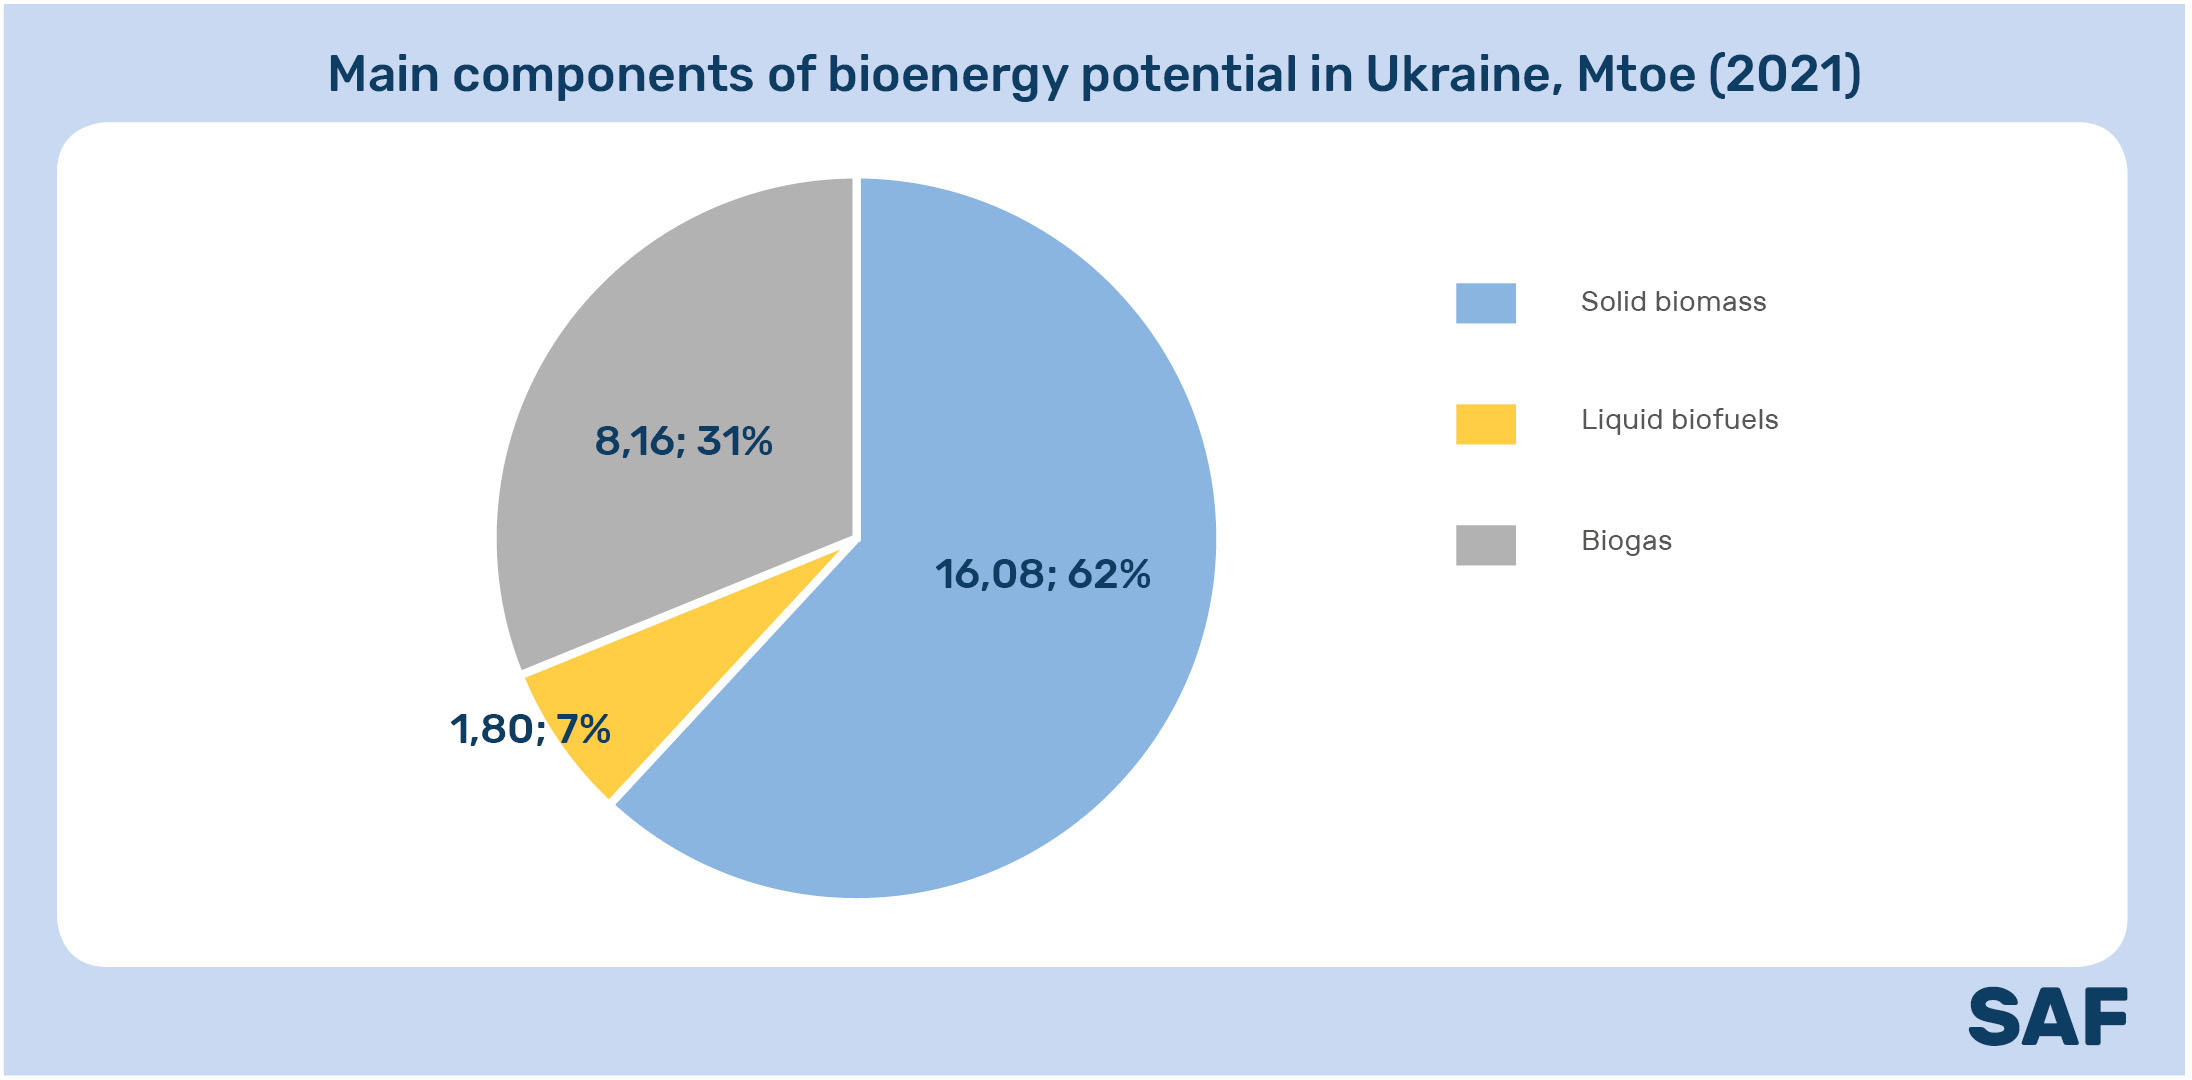 Main components of bioenergy potential in Ukraine, Mtoe (2021)